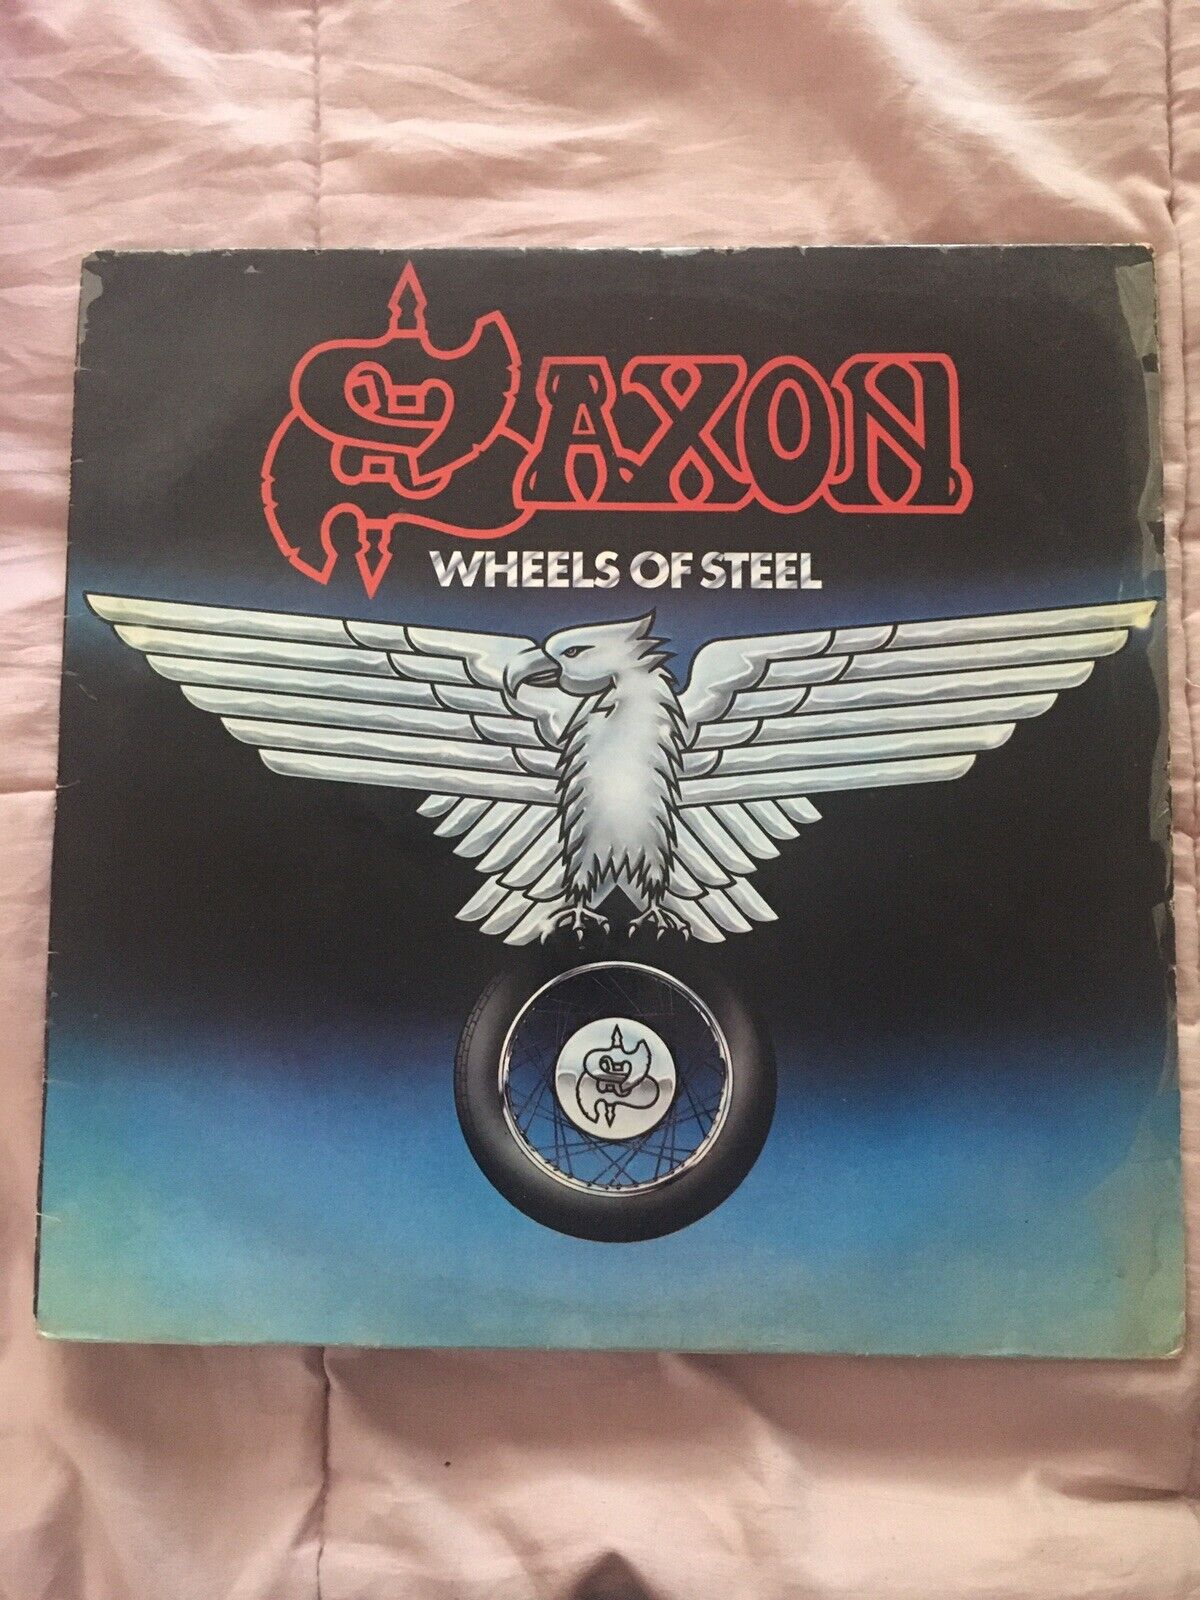 Original Vintage Vinyl Record Of Saxon’s Album “Wheels Of Steel” (Used)